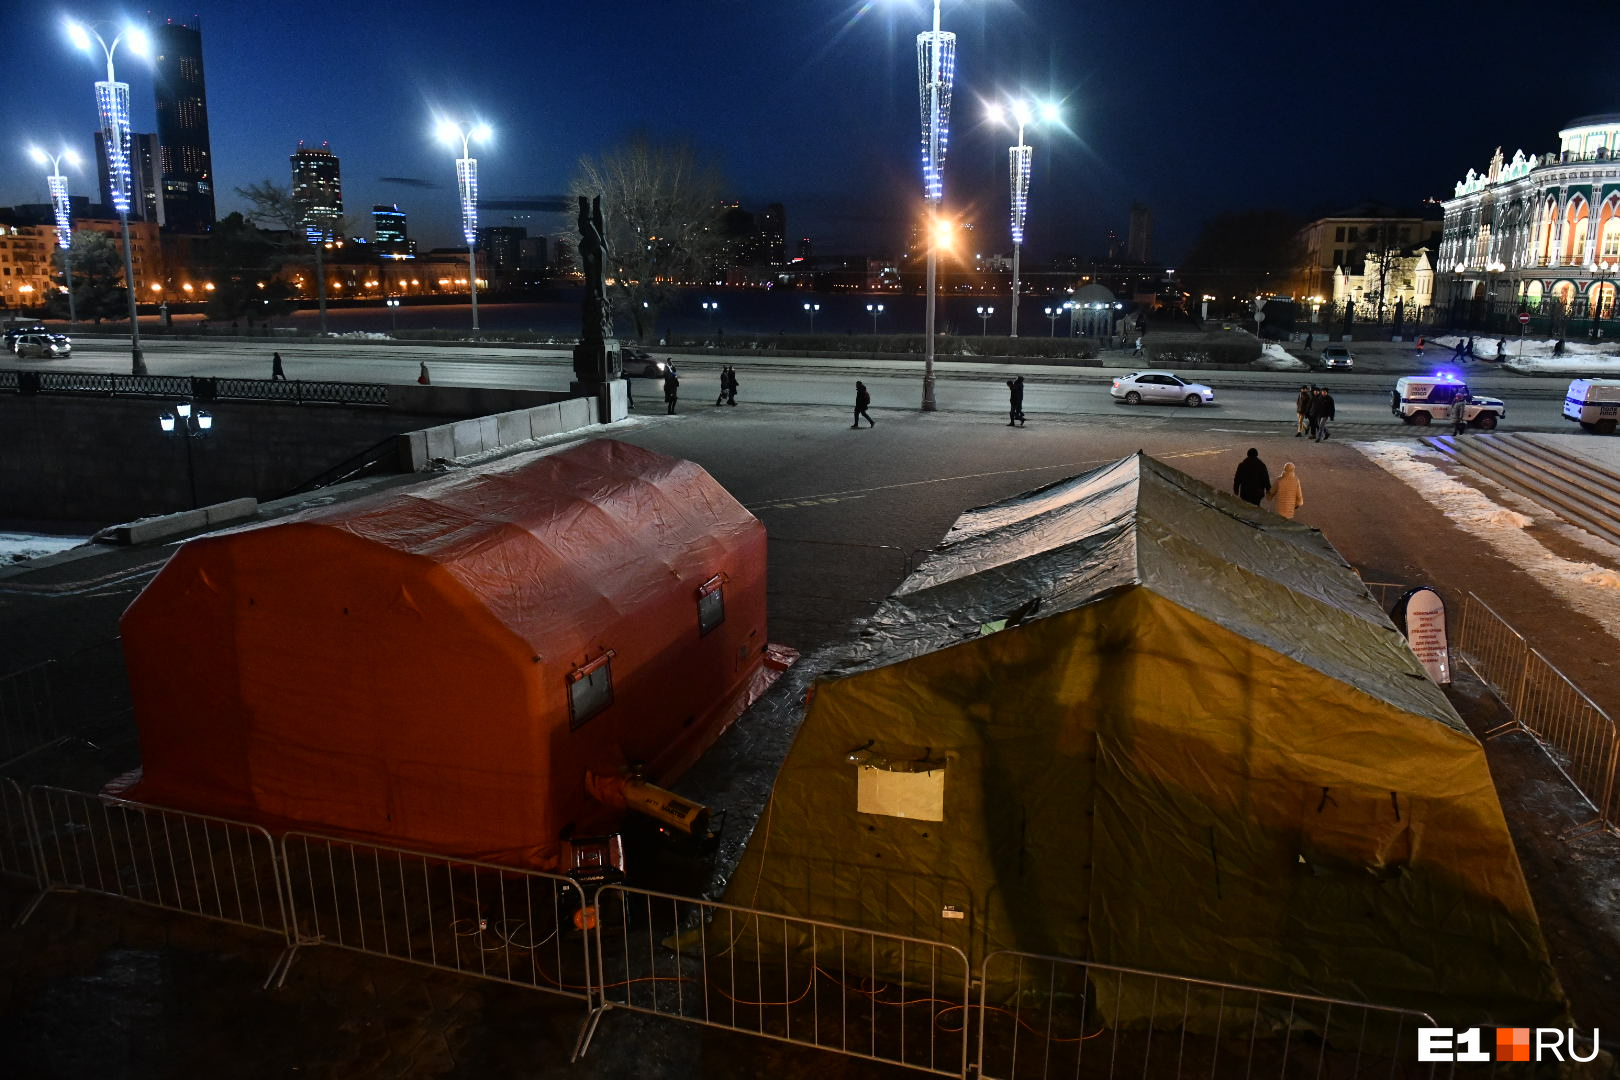 Накануне вечером вместо палаток на площади находились протестующие